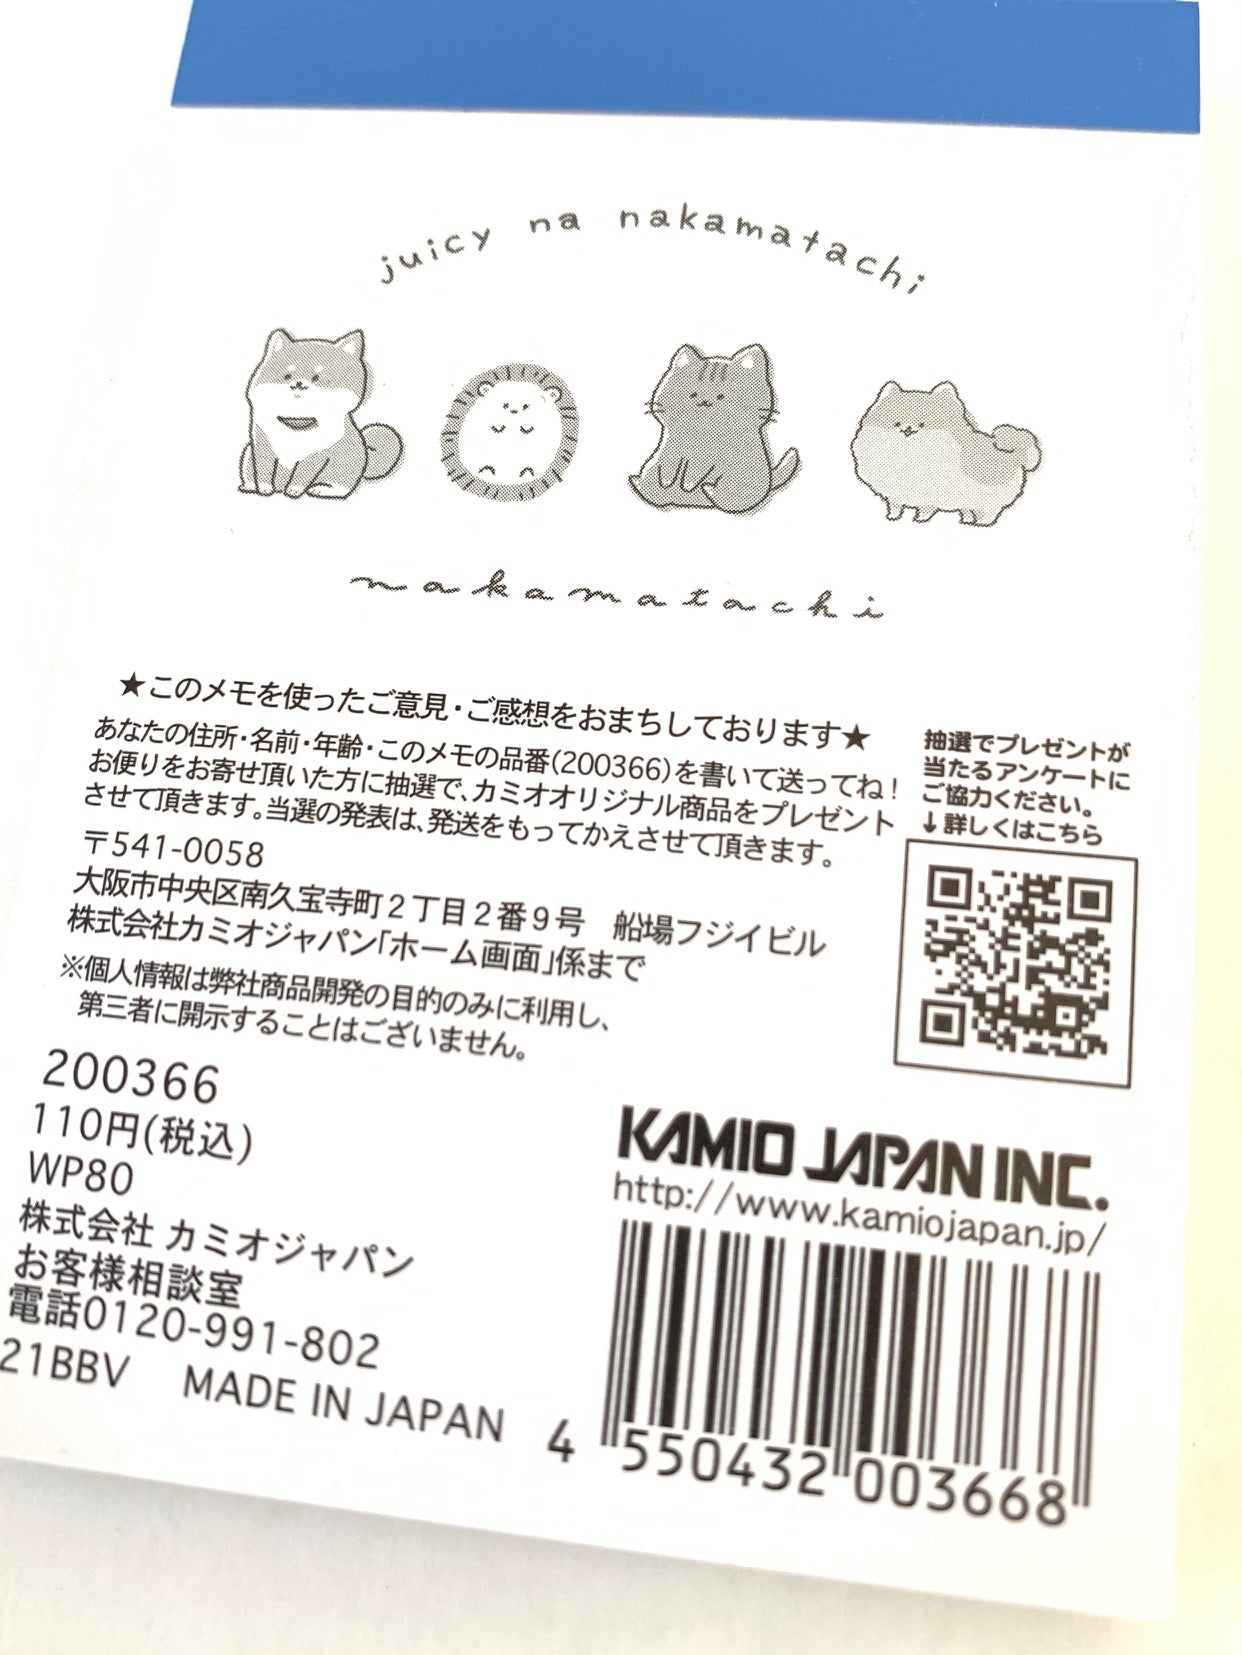 X 200366 Animal Dreams Juicy Na Nakamafachi Mini Notepad-DISCONTINUED